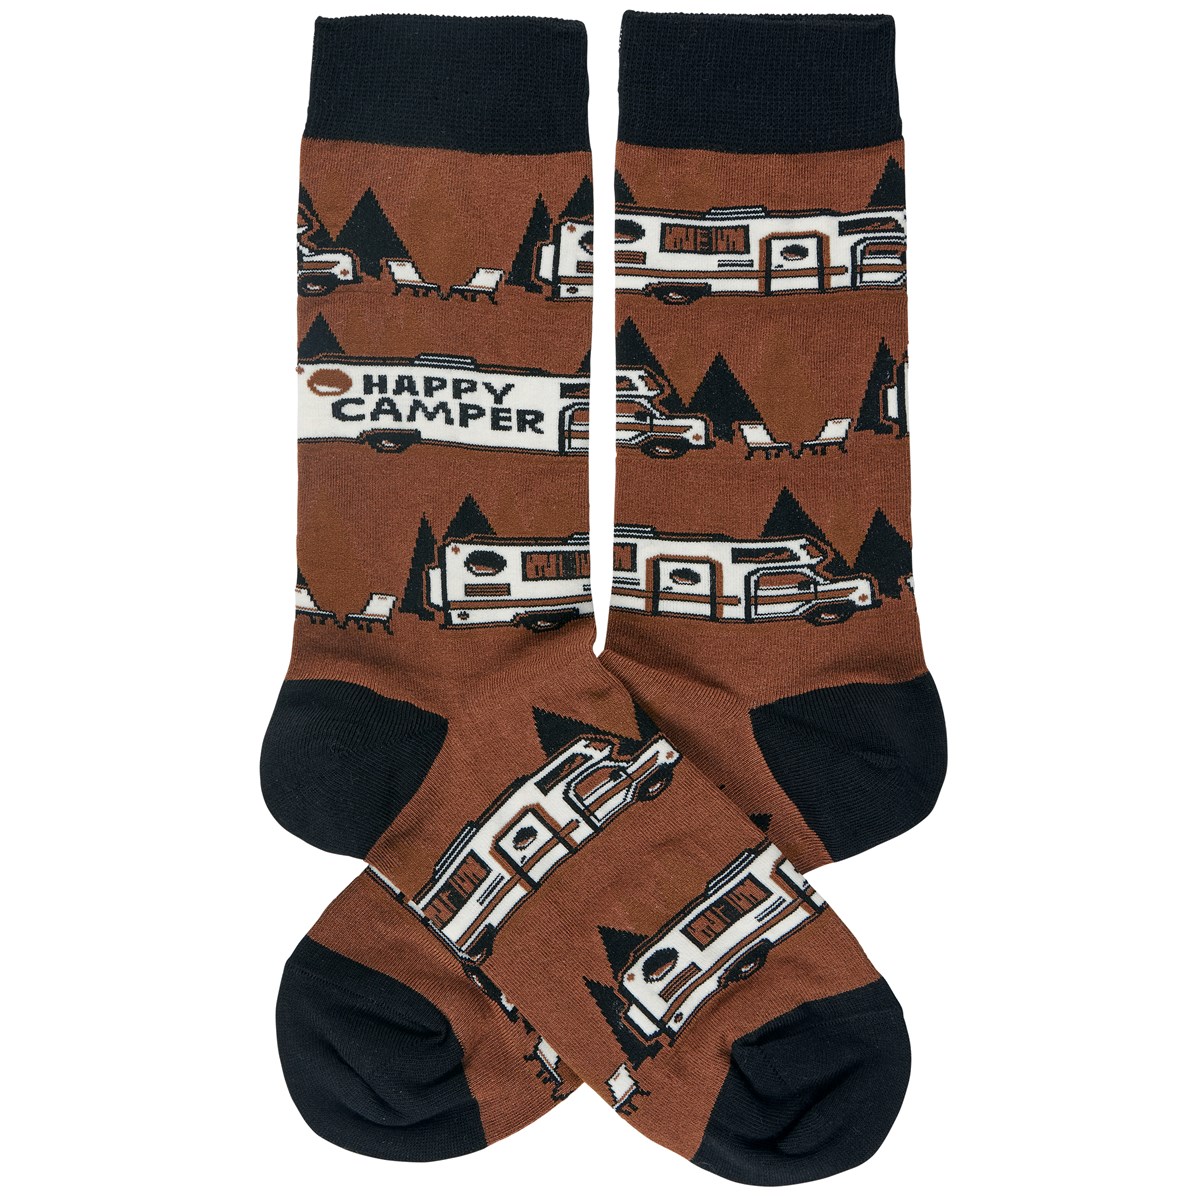 Happy Camper Socks - Cotton, Nylon, Spandex